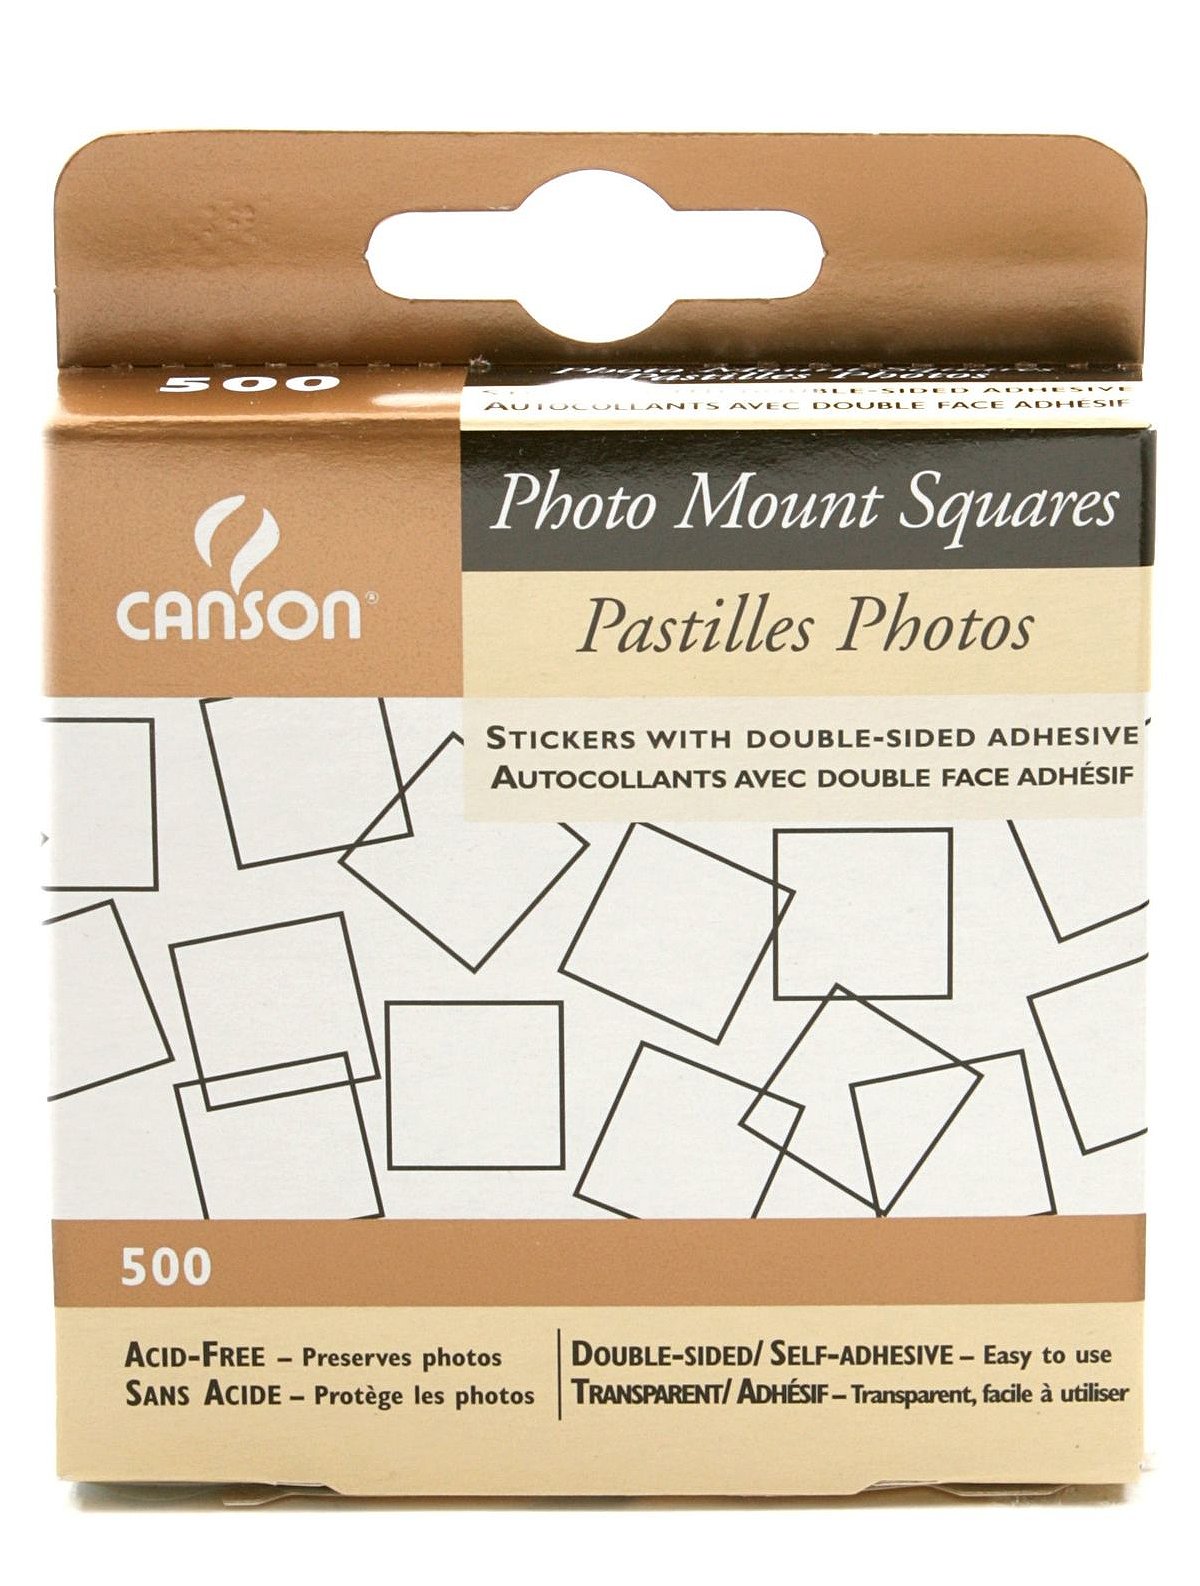 12 Sheets Self-Adhesive Photo Corners Scrapbooking Photo Mounting Stickers  Photo Corners 